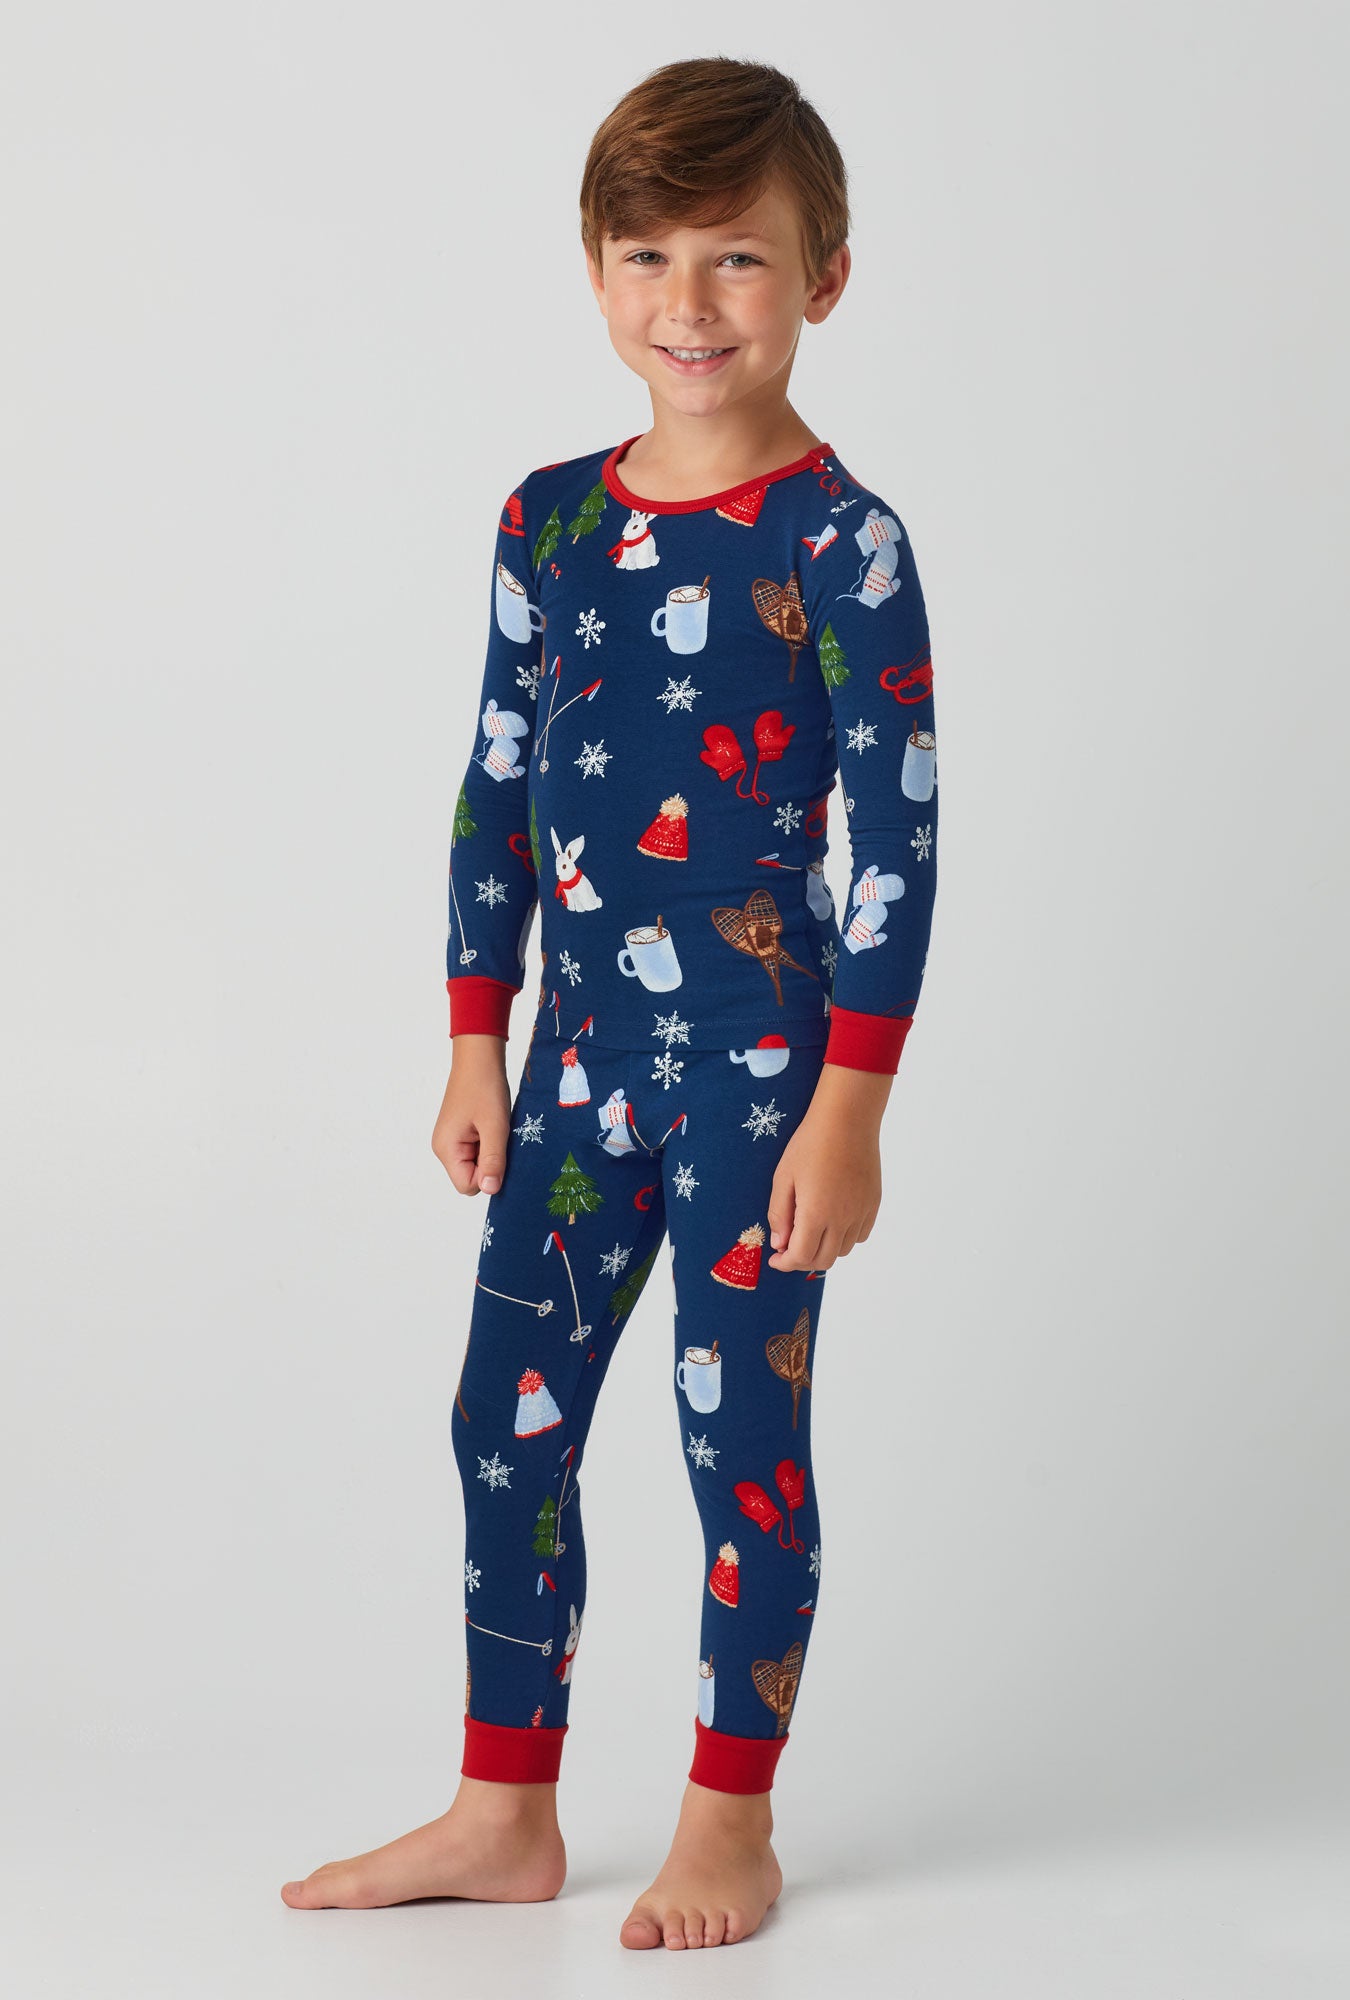 A boy wearing blue Long Sleeve Stretch Jersey Kids PJ Set with Seasonal Delights print